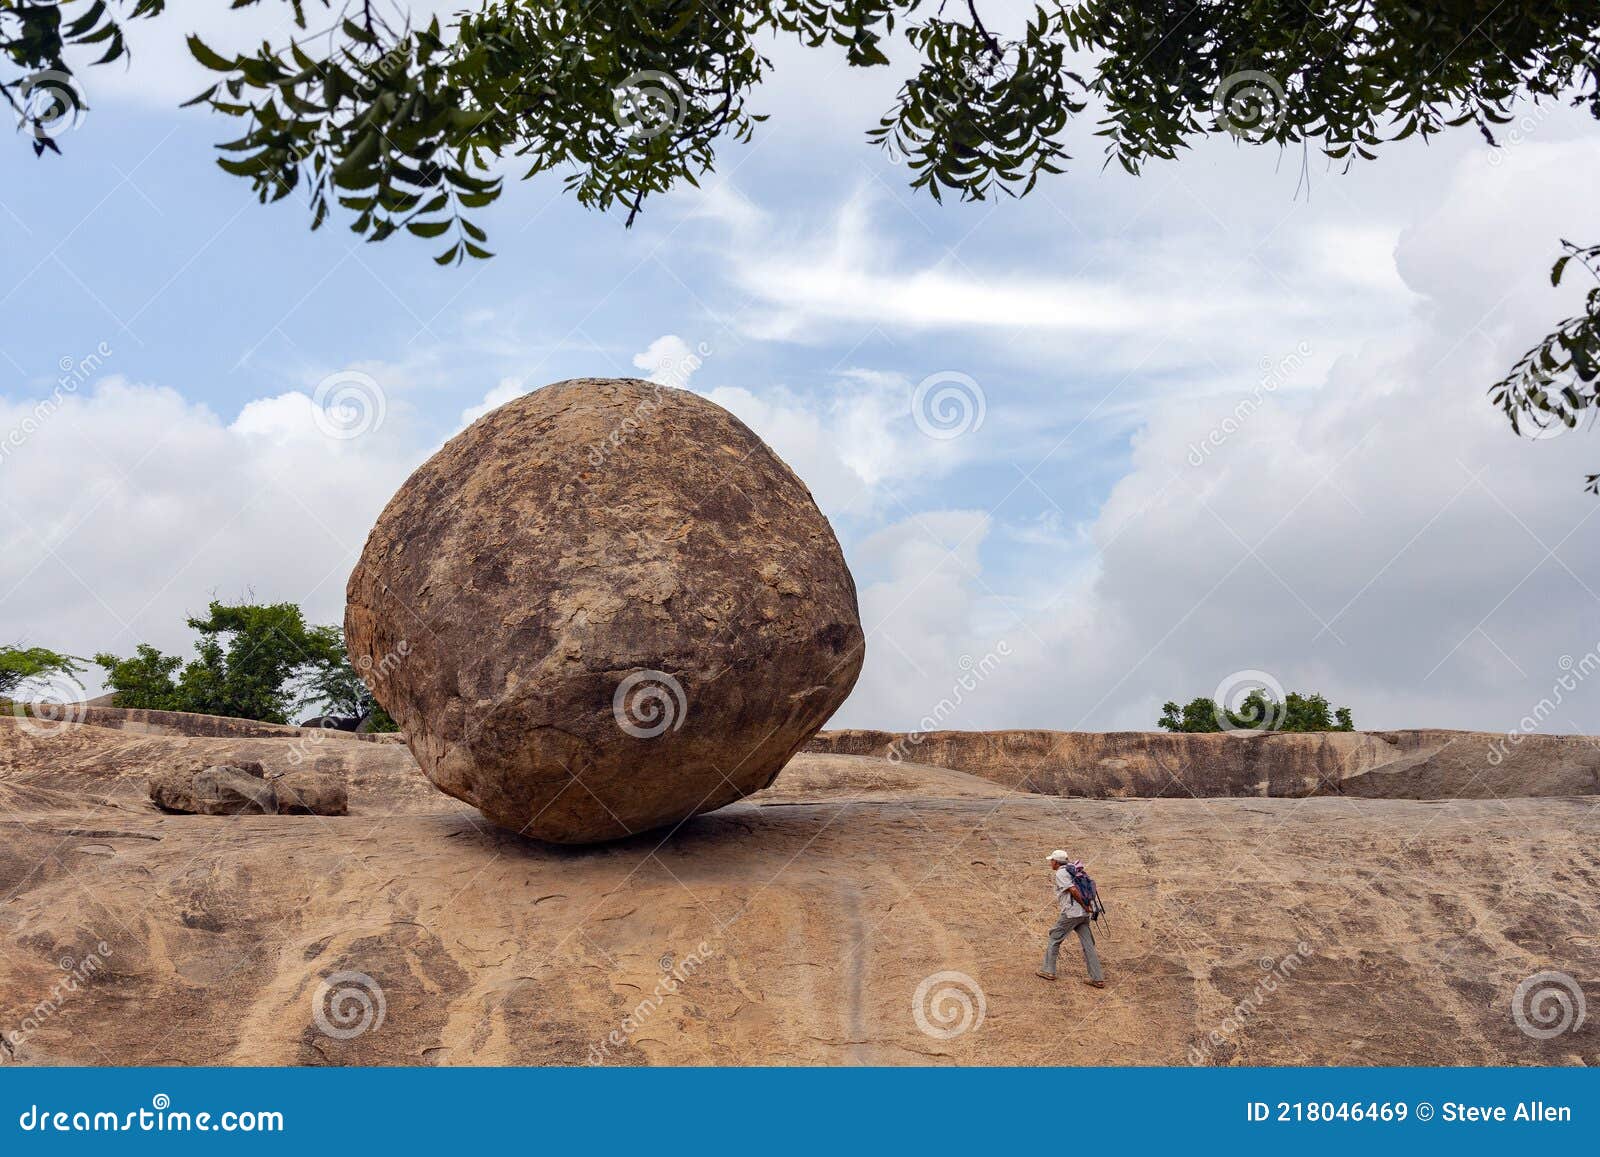 Krishna`s Butter Ball, a Huge Boulder in Mamallapuram, Tamil Nadu, India  Stock Image - Image of site, asia: 222414965